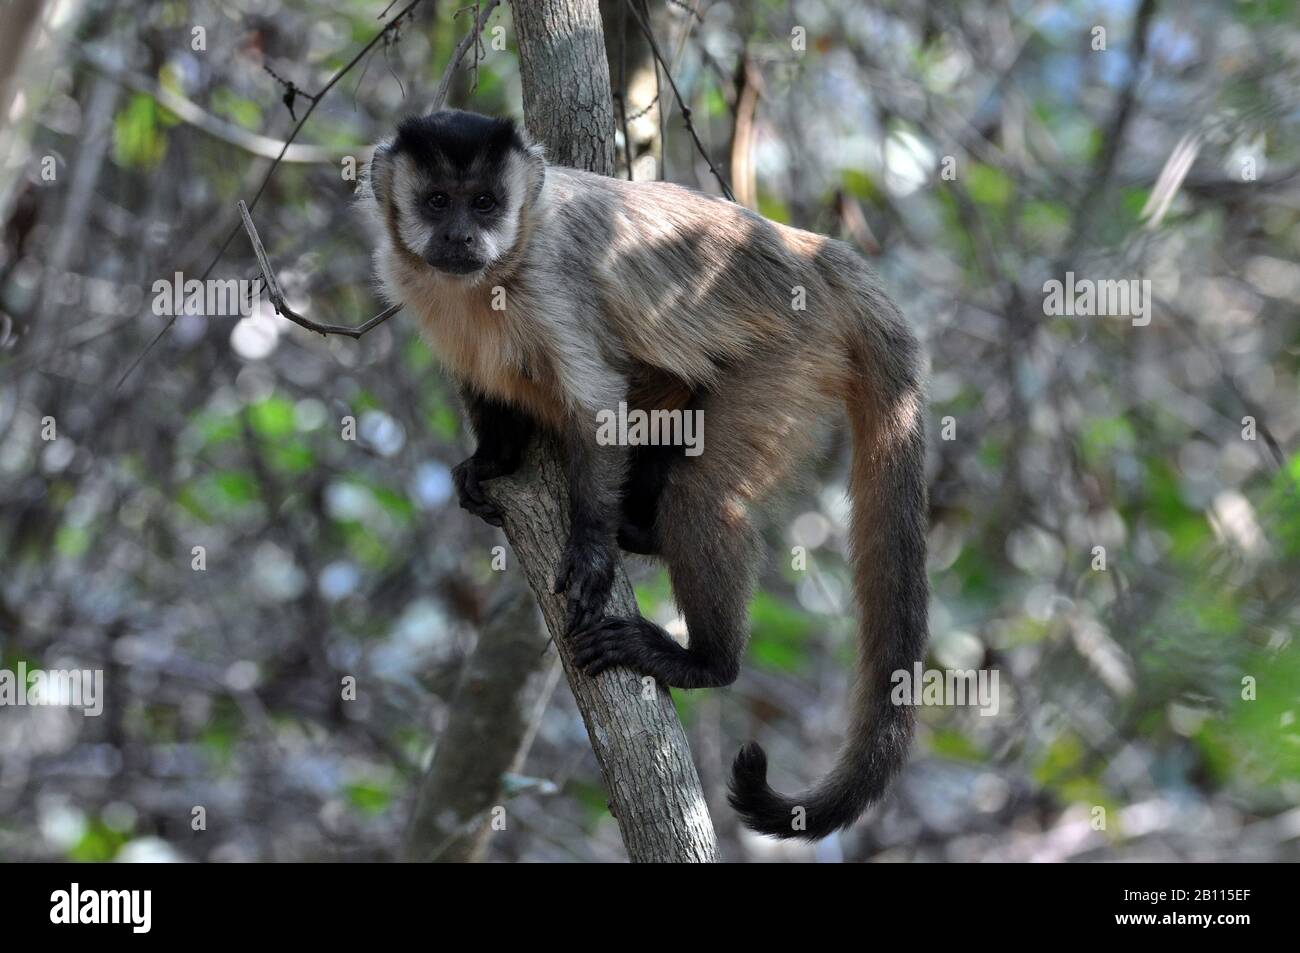 Black-Capped Capuchin, Brown-Capuchin Monkey (Cebus apella), on a branch on a tree, Brazil, Pantanal Stock Photo